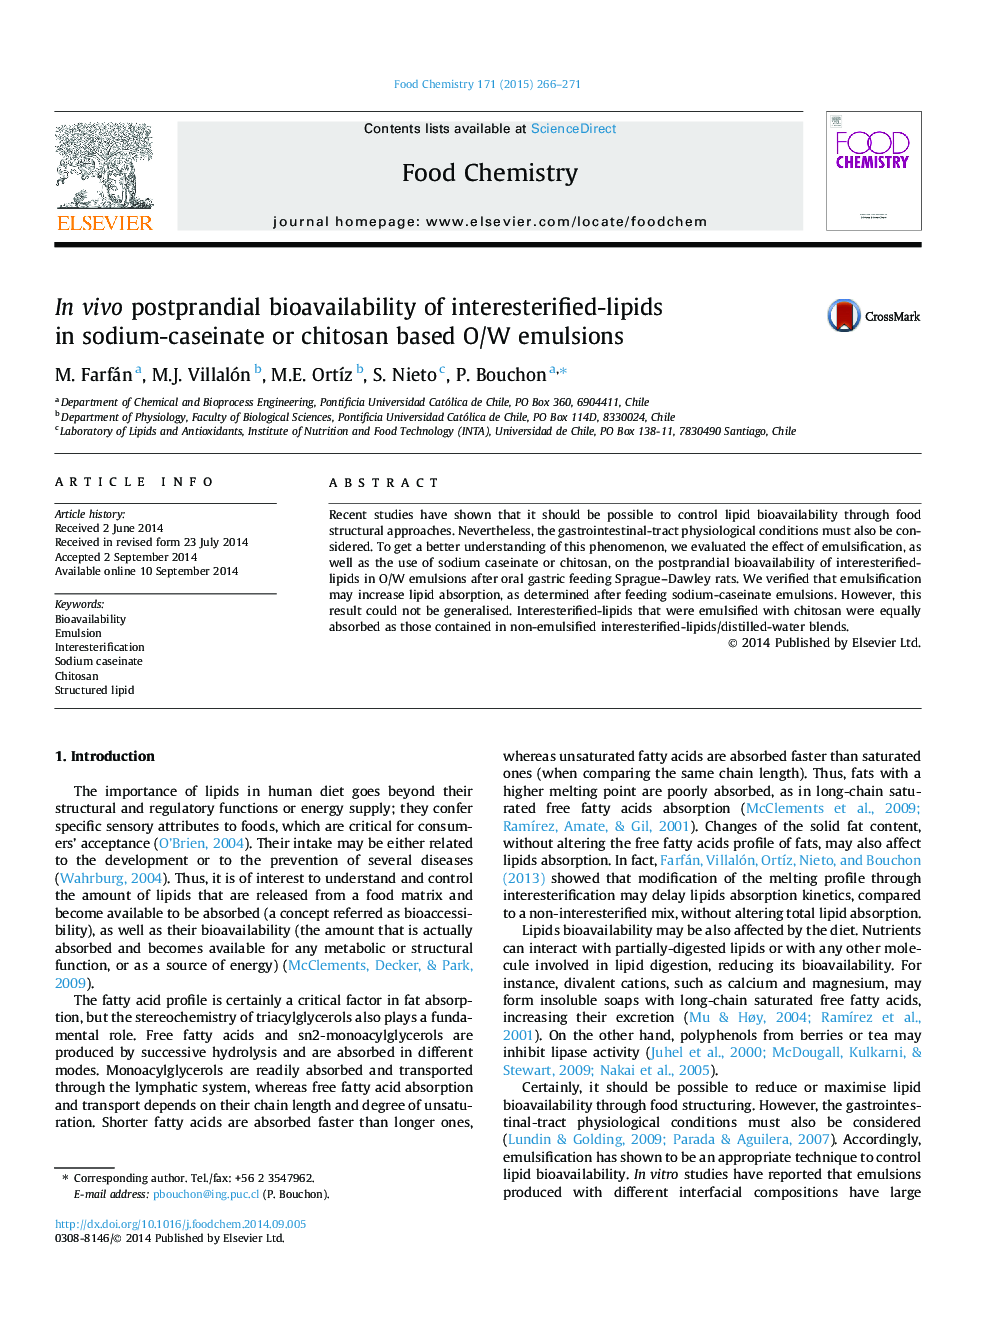 In vivo postprandial bioavailability of interesterified-lipids in sodium-caseinate or chitosan based O/W emulsions